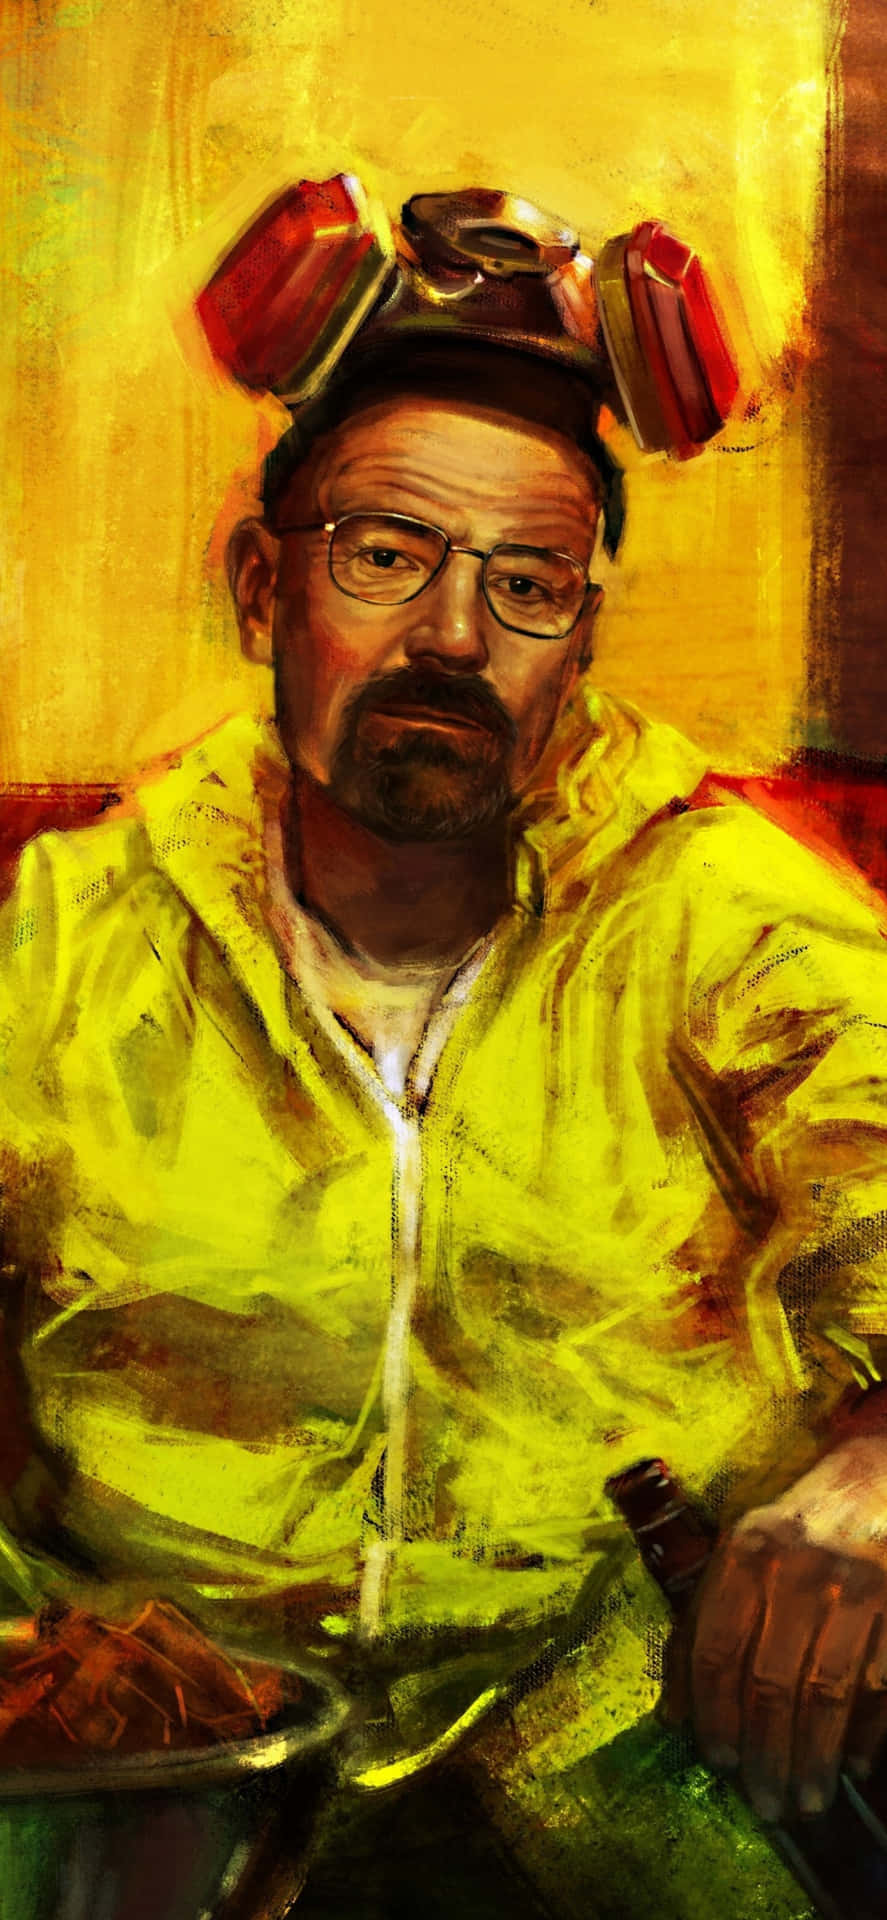 Yellow Hazmat Suit Portrait Wallpaper